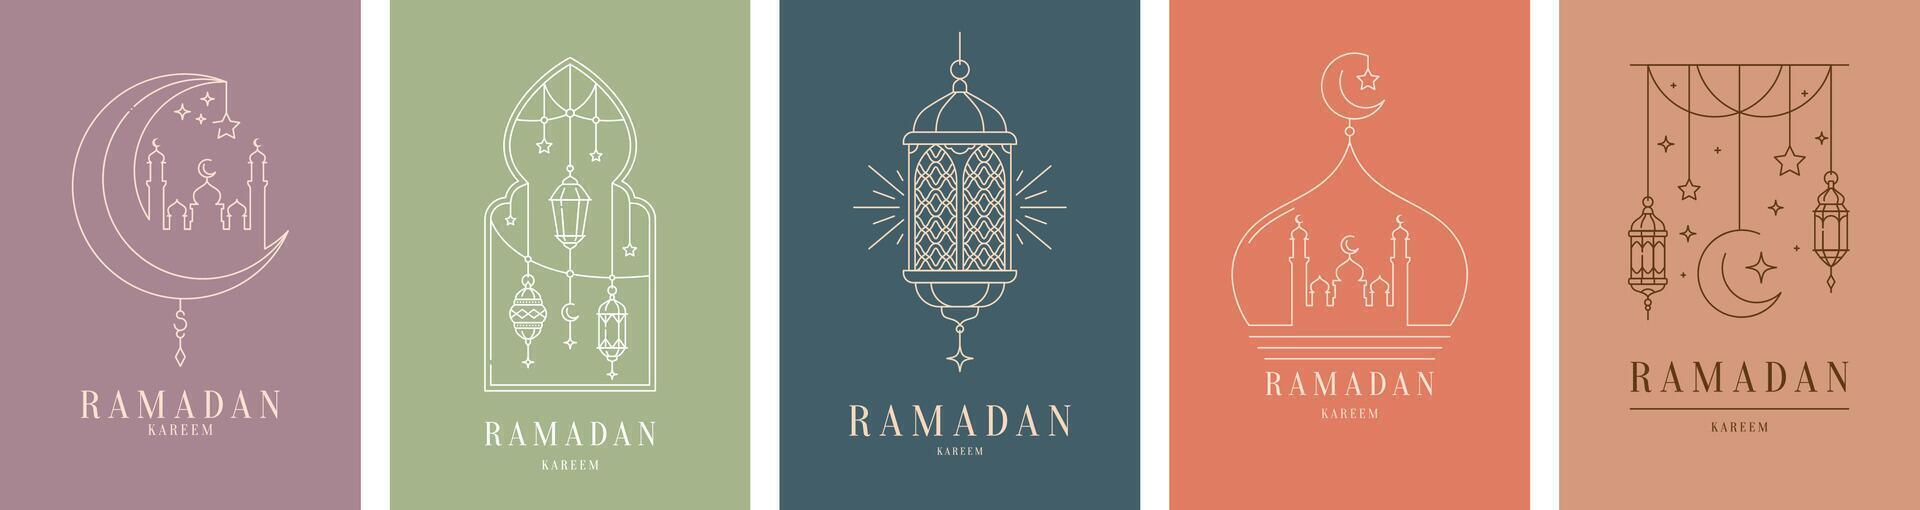 Ramadan kareem saluti con musulmano moschea, Luna vettore